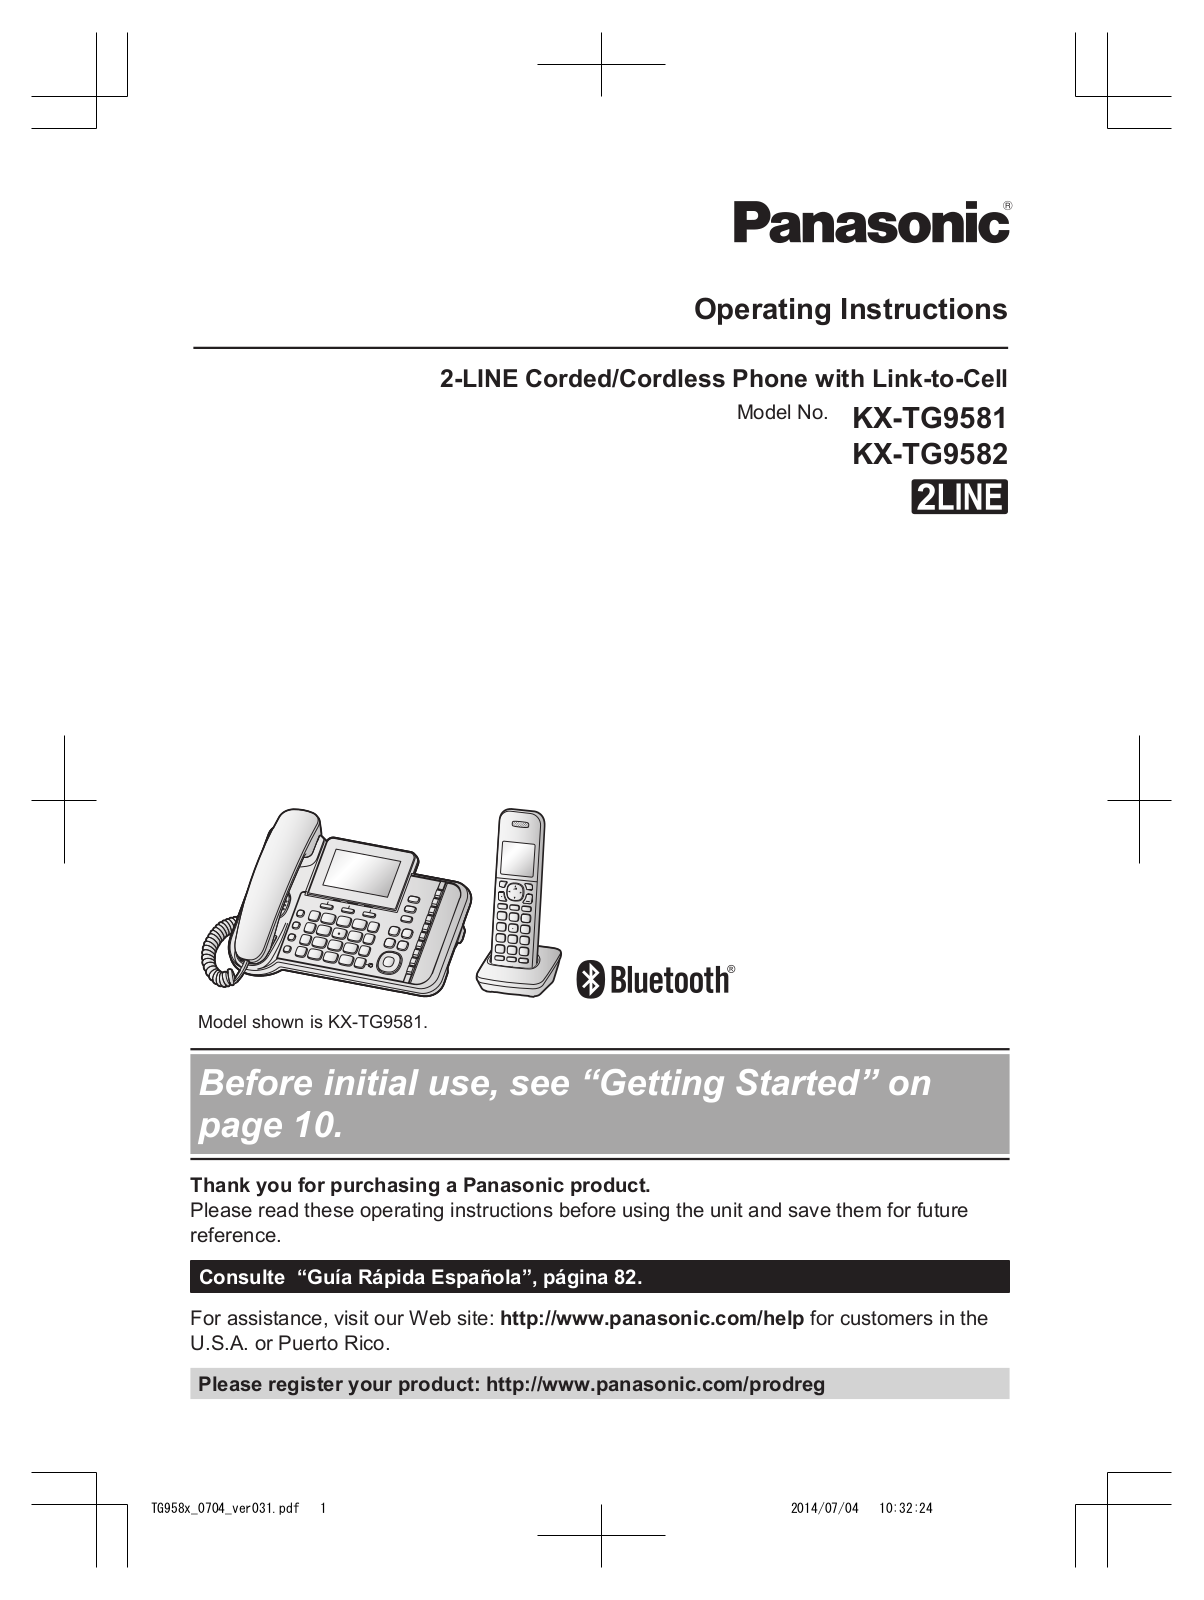 Panasonic 96NKX-TG9581 Users Manual